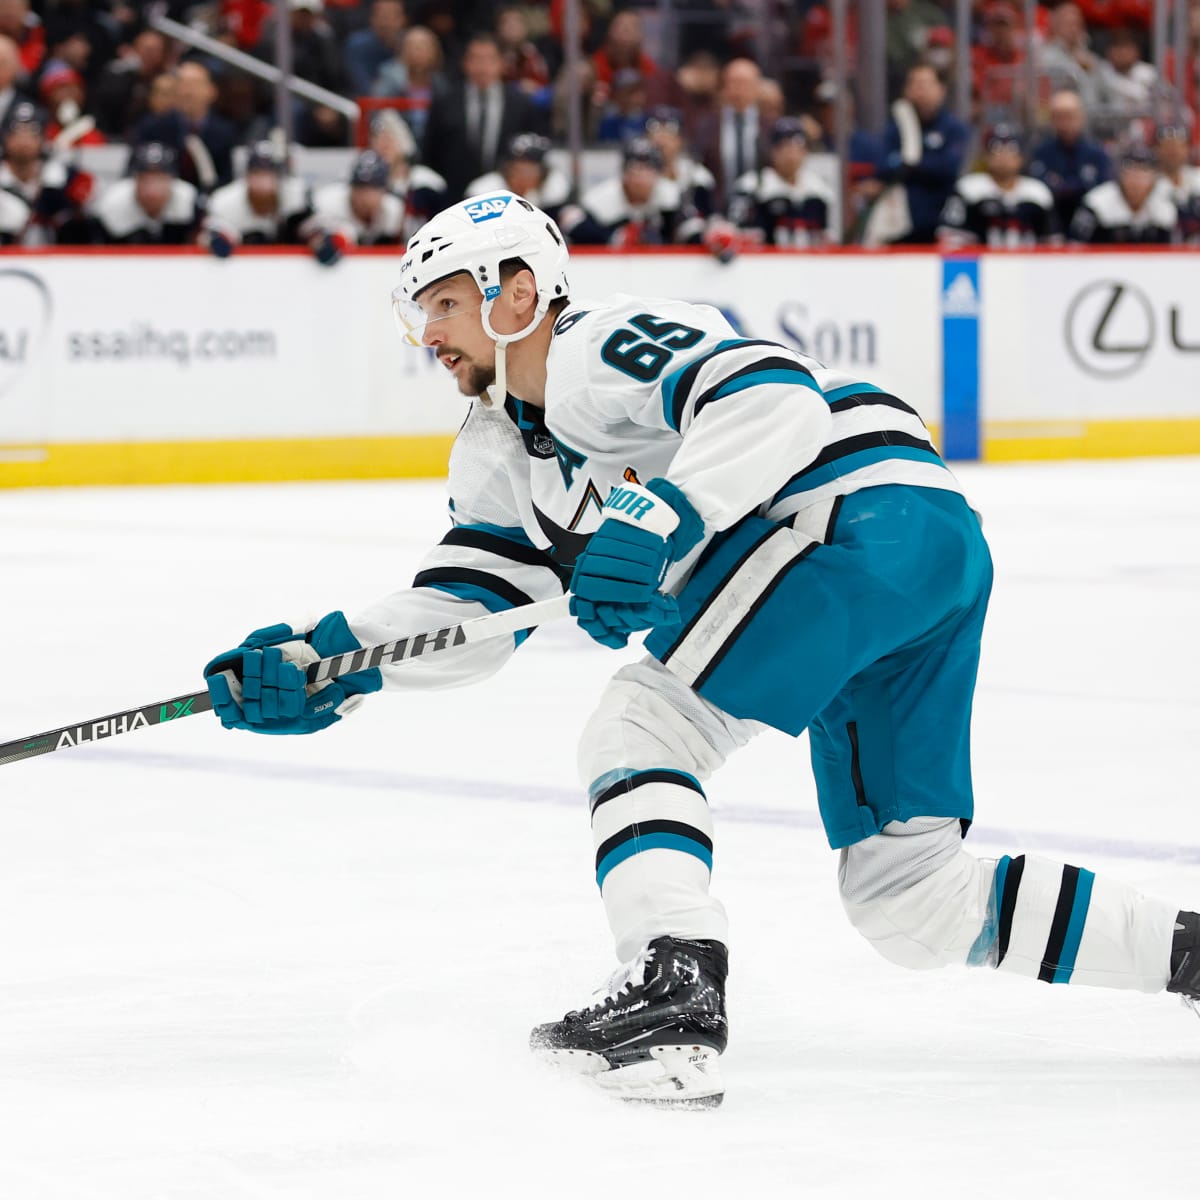 Sharks-Edmonton Oilers: Erik Karlsson's last home game in San Jose?